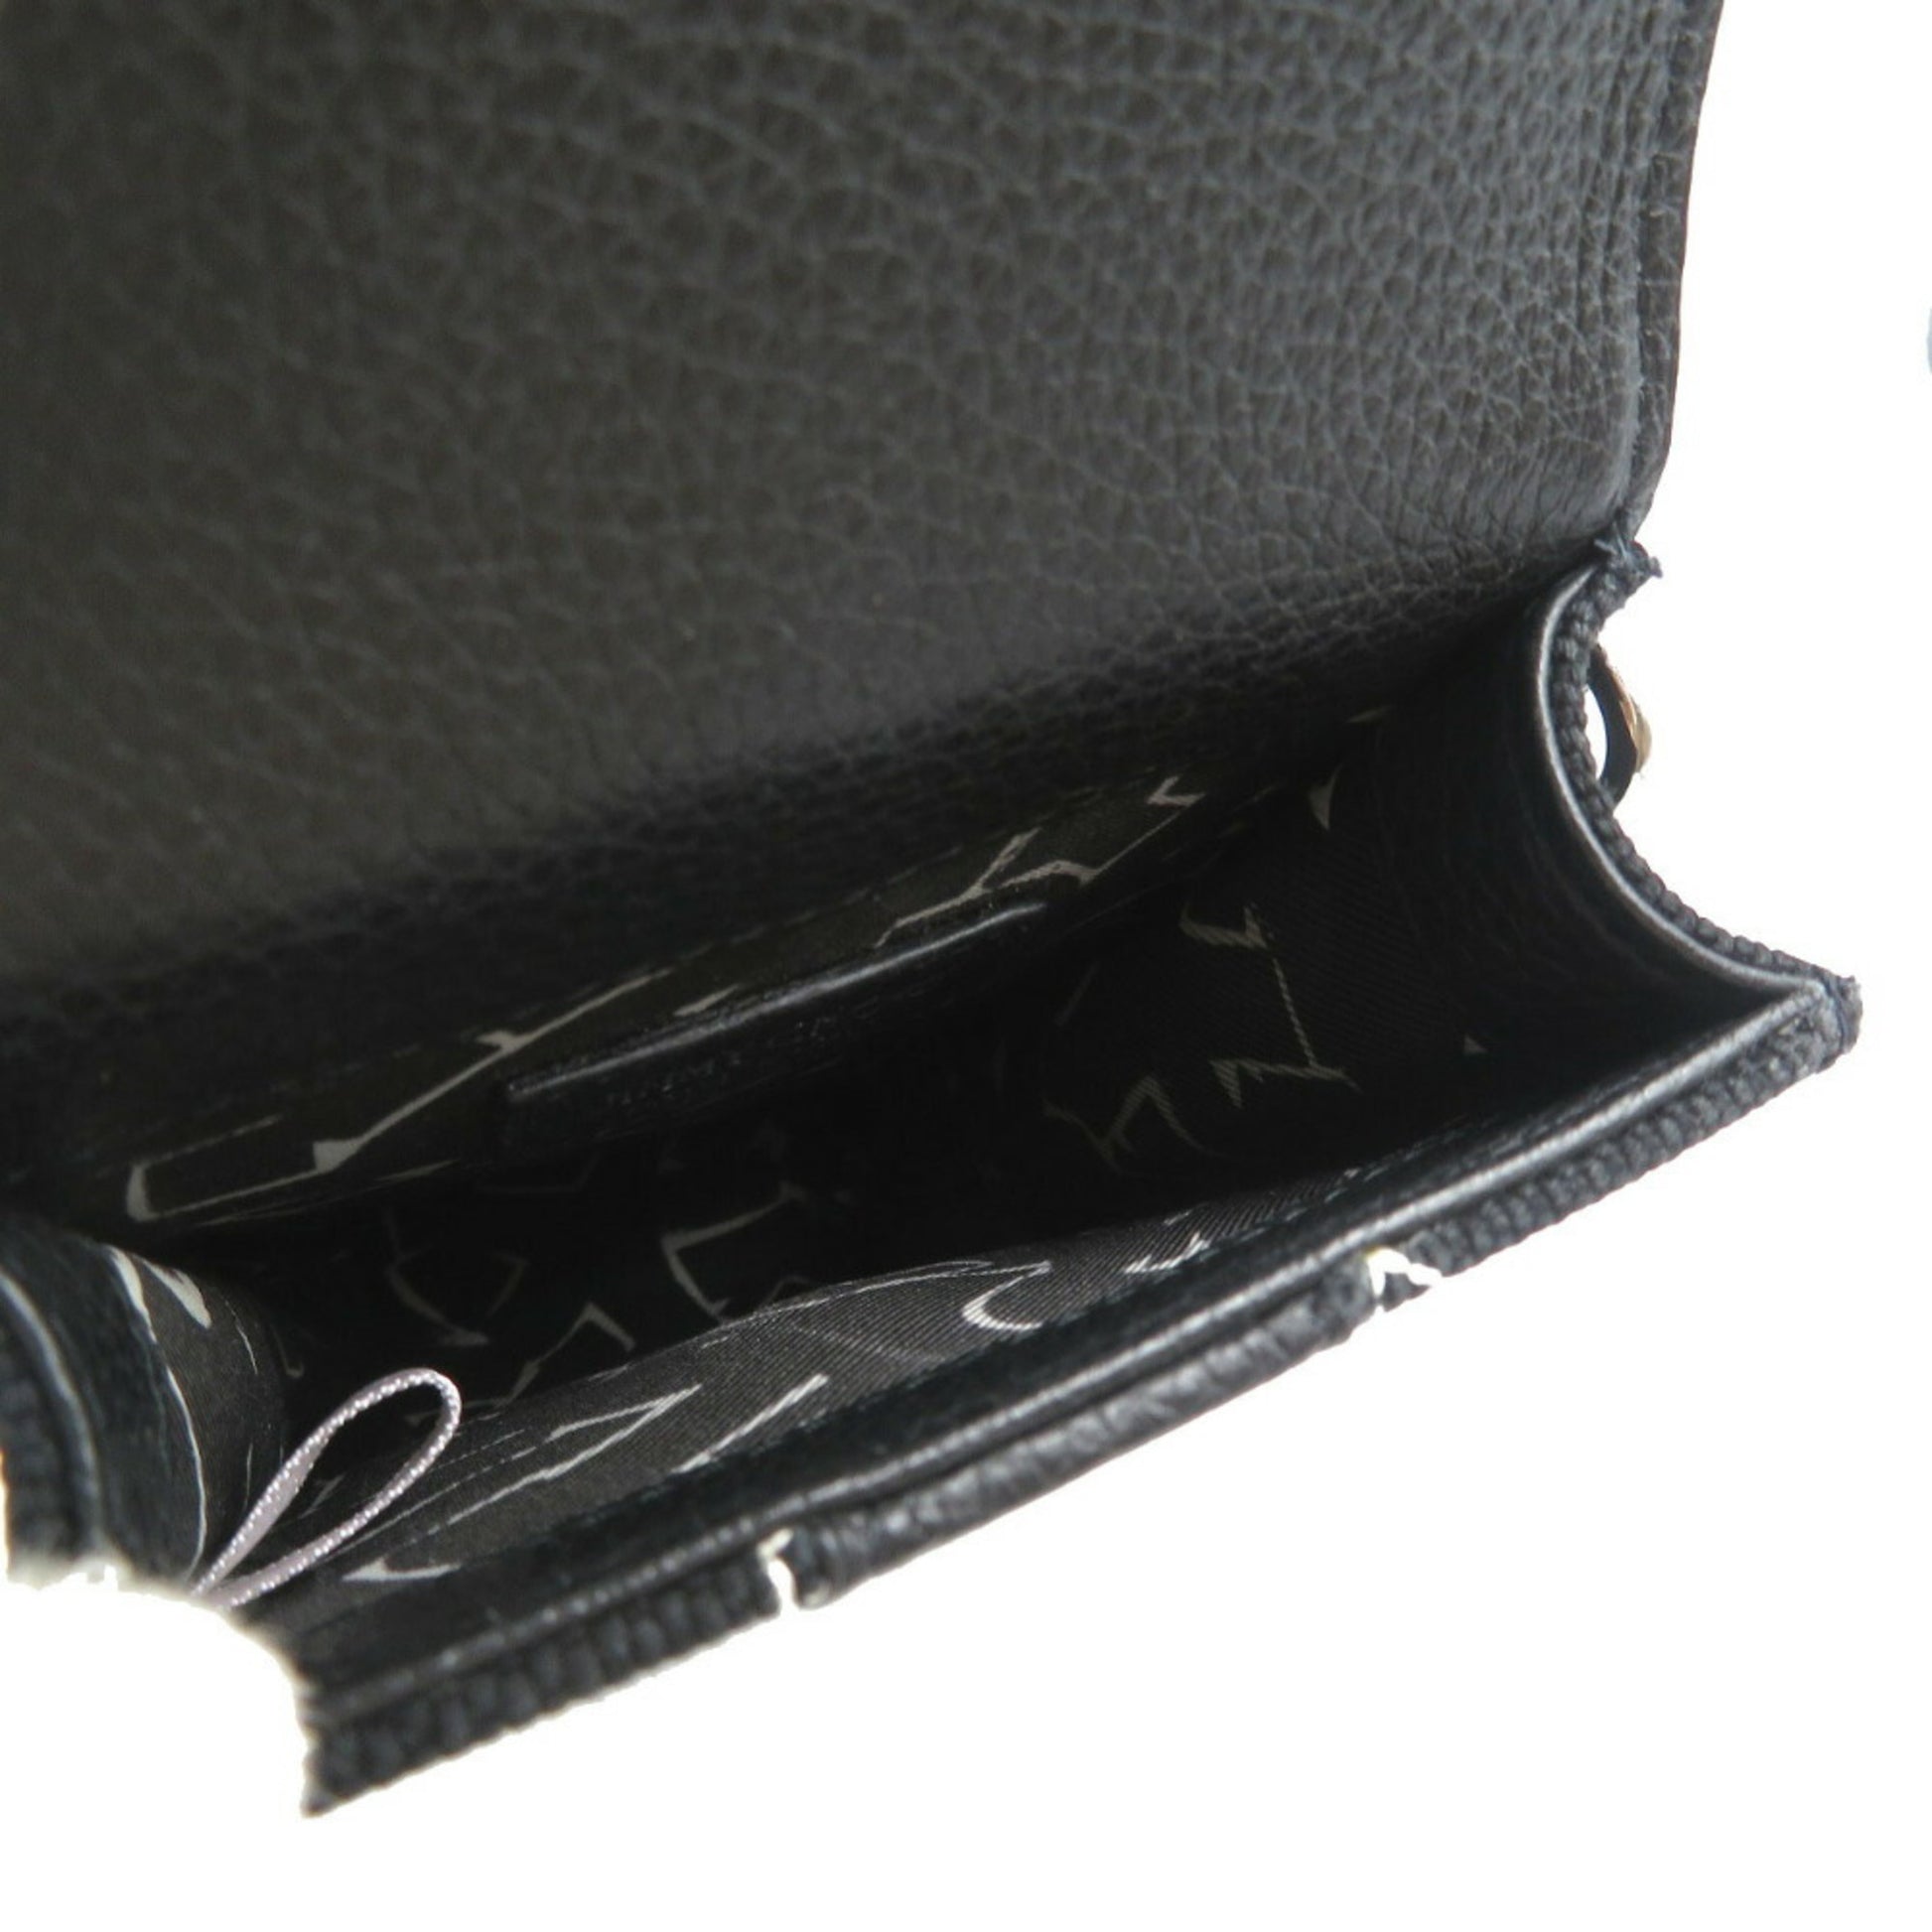 Maison Margiela - Mini Strap Wallet